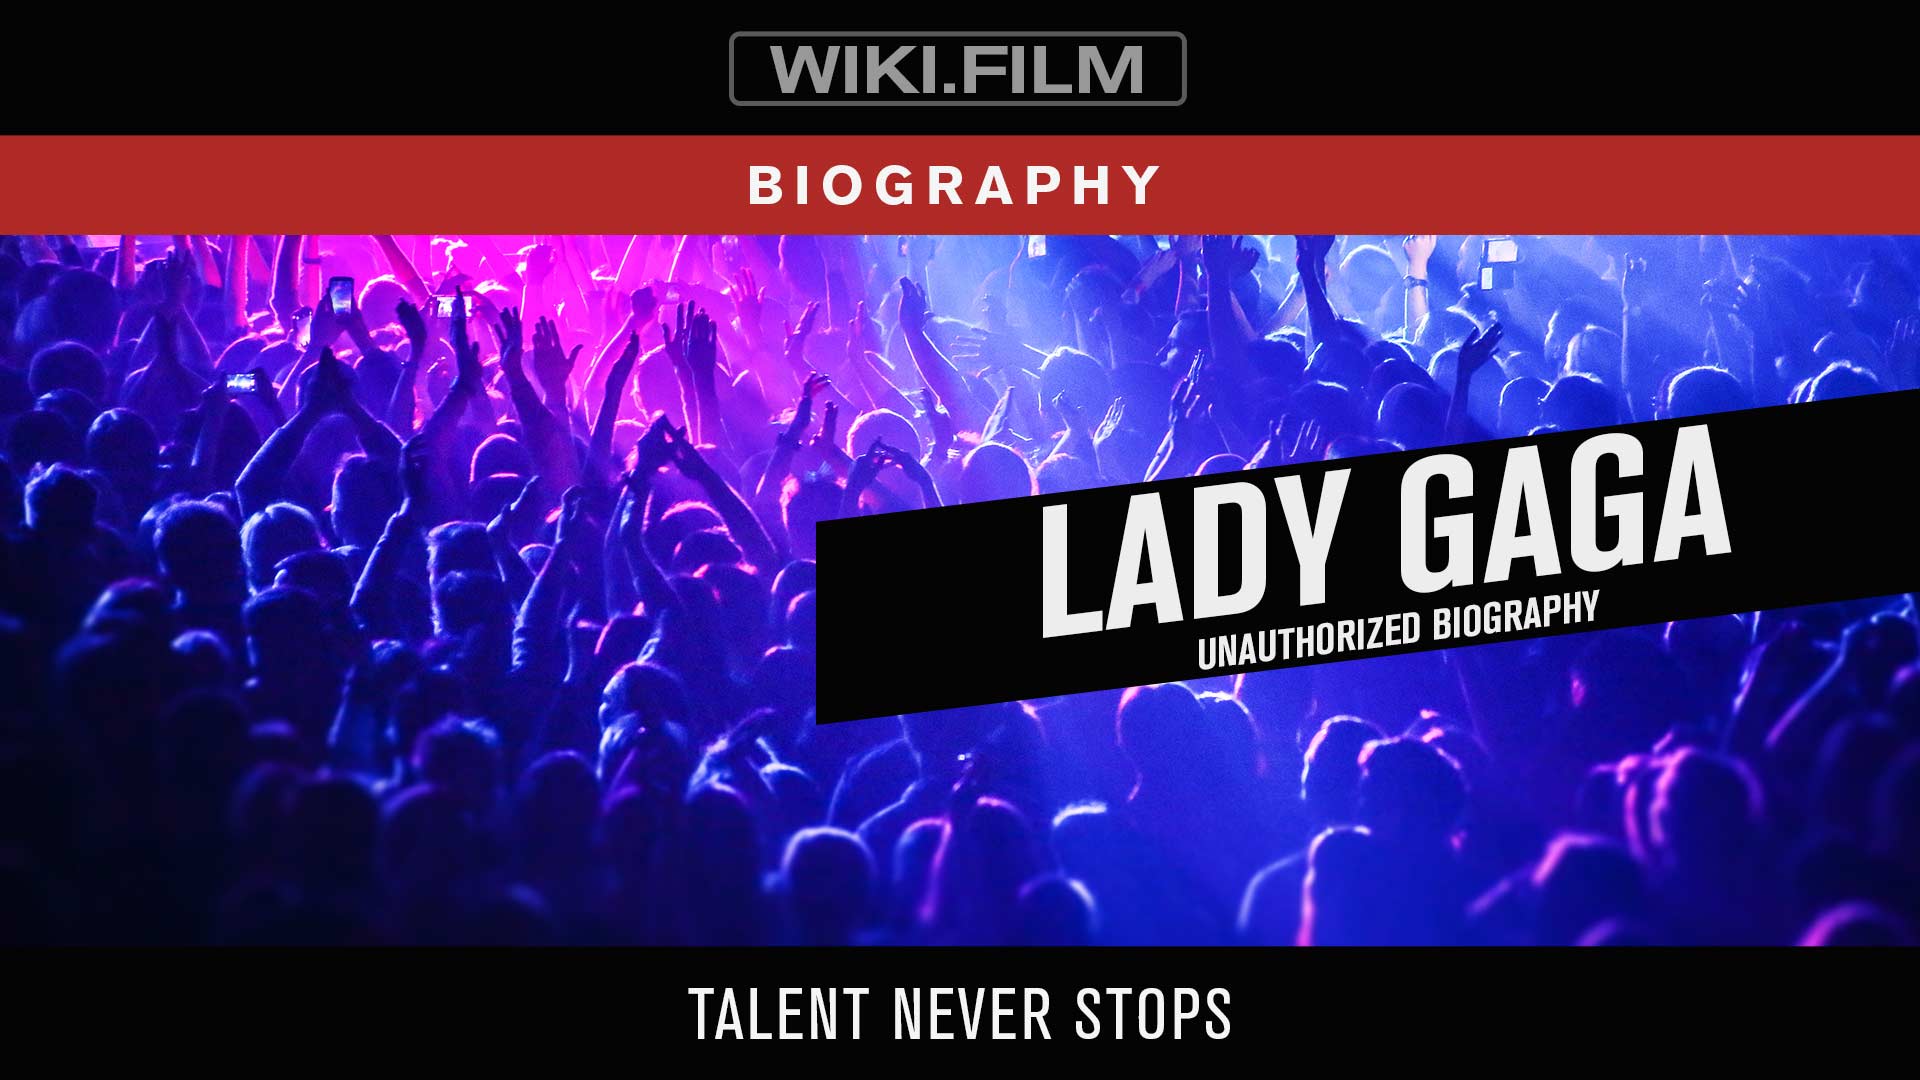 Lady Gaga: Unauthorized Biography